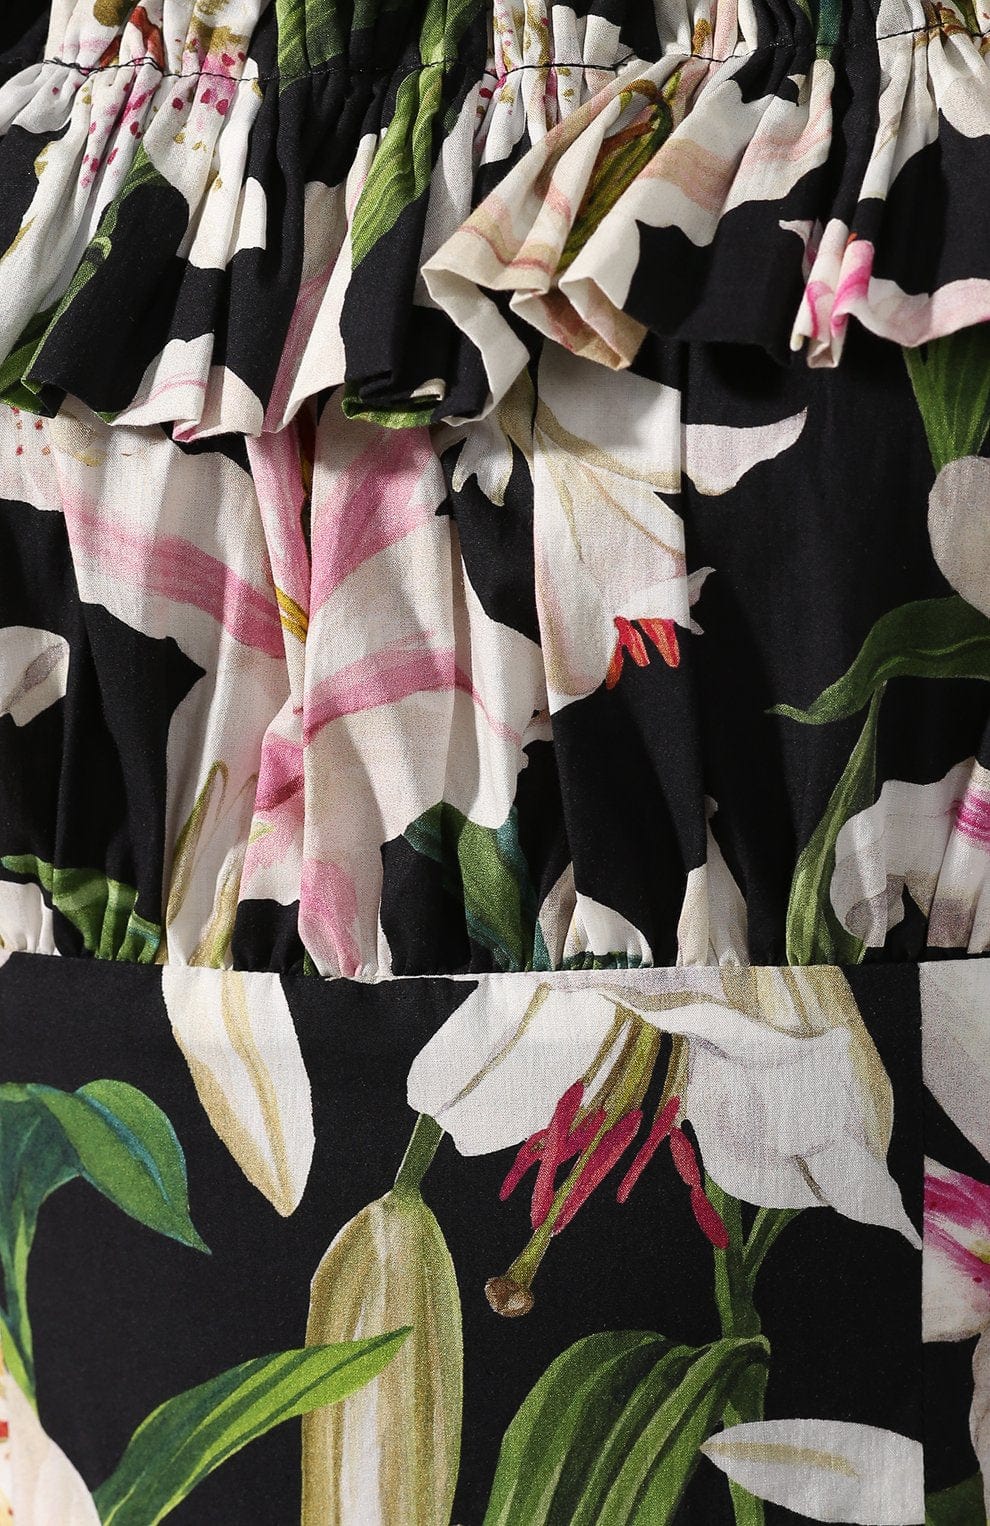 Dolce & Gabbana Lily-Print Poplin Off-The-Shoulder Dress